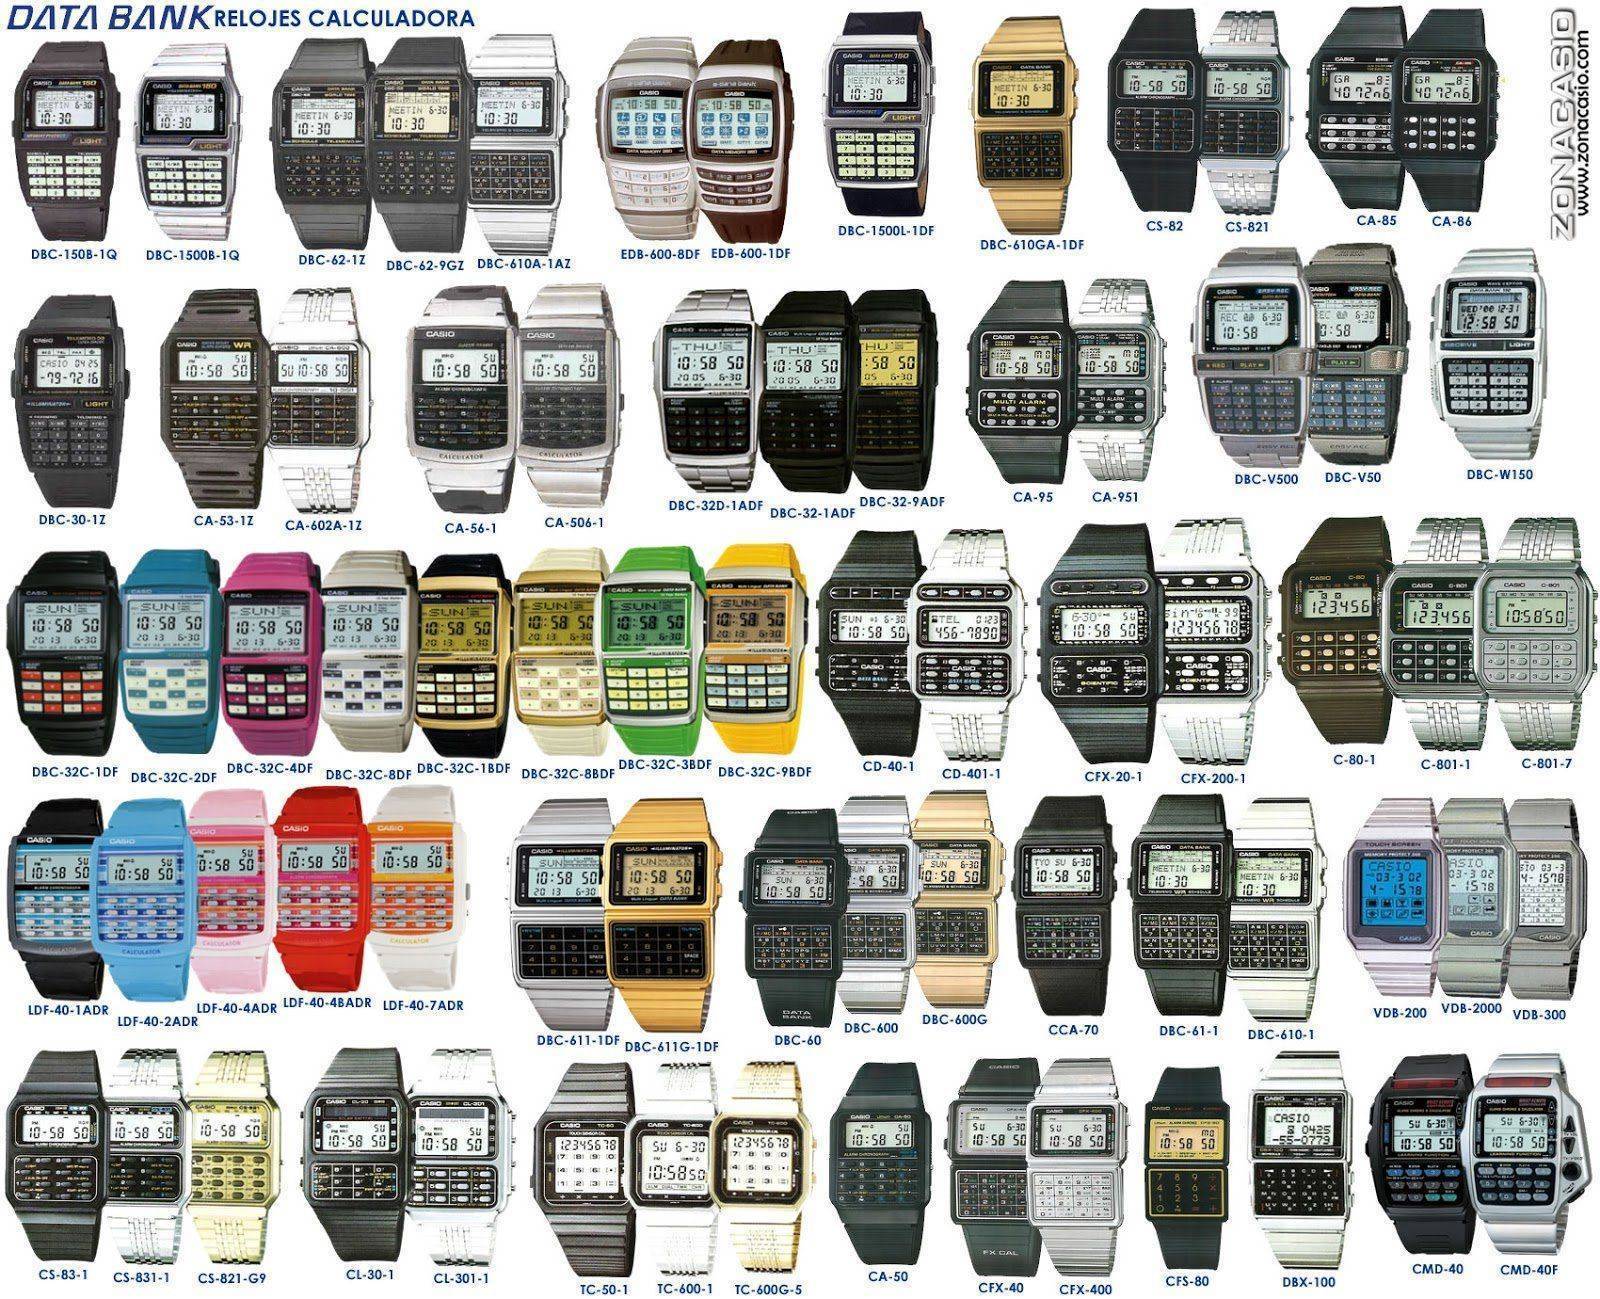 poster-relojes-calculadora-zonacasio-goan-2013-08.jpg